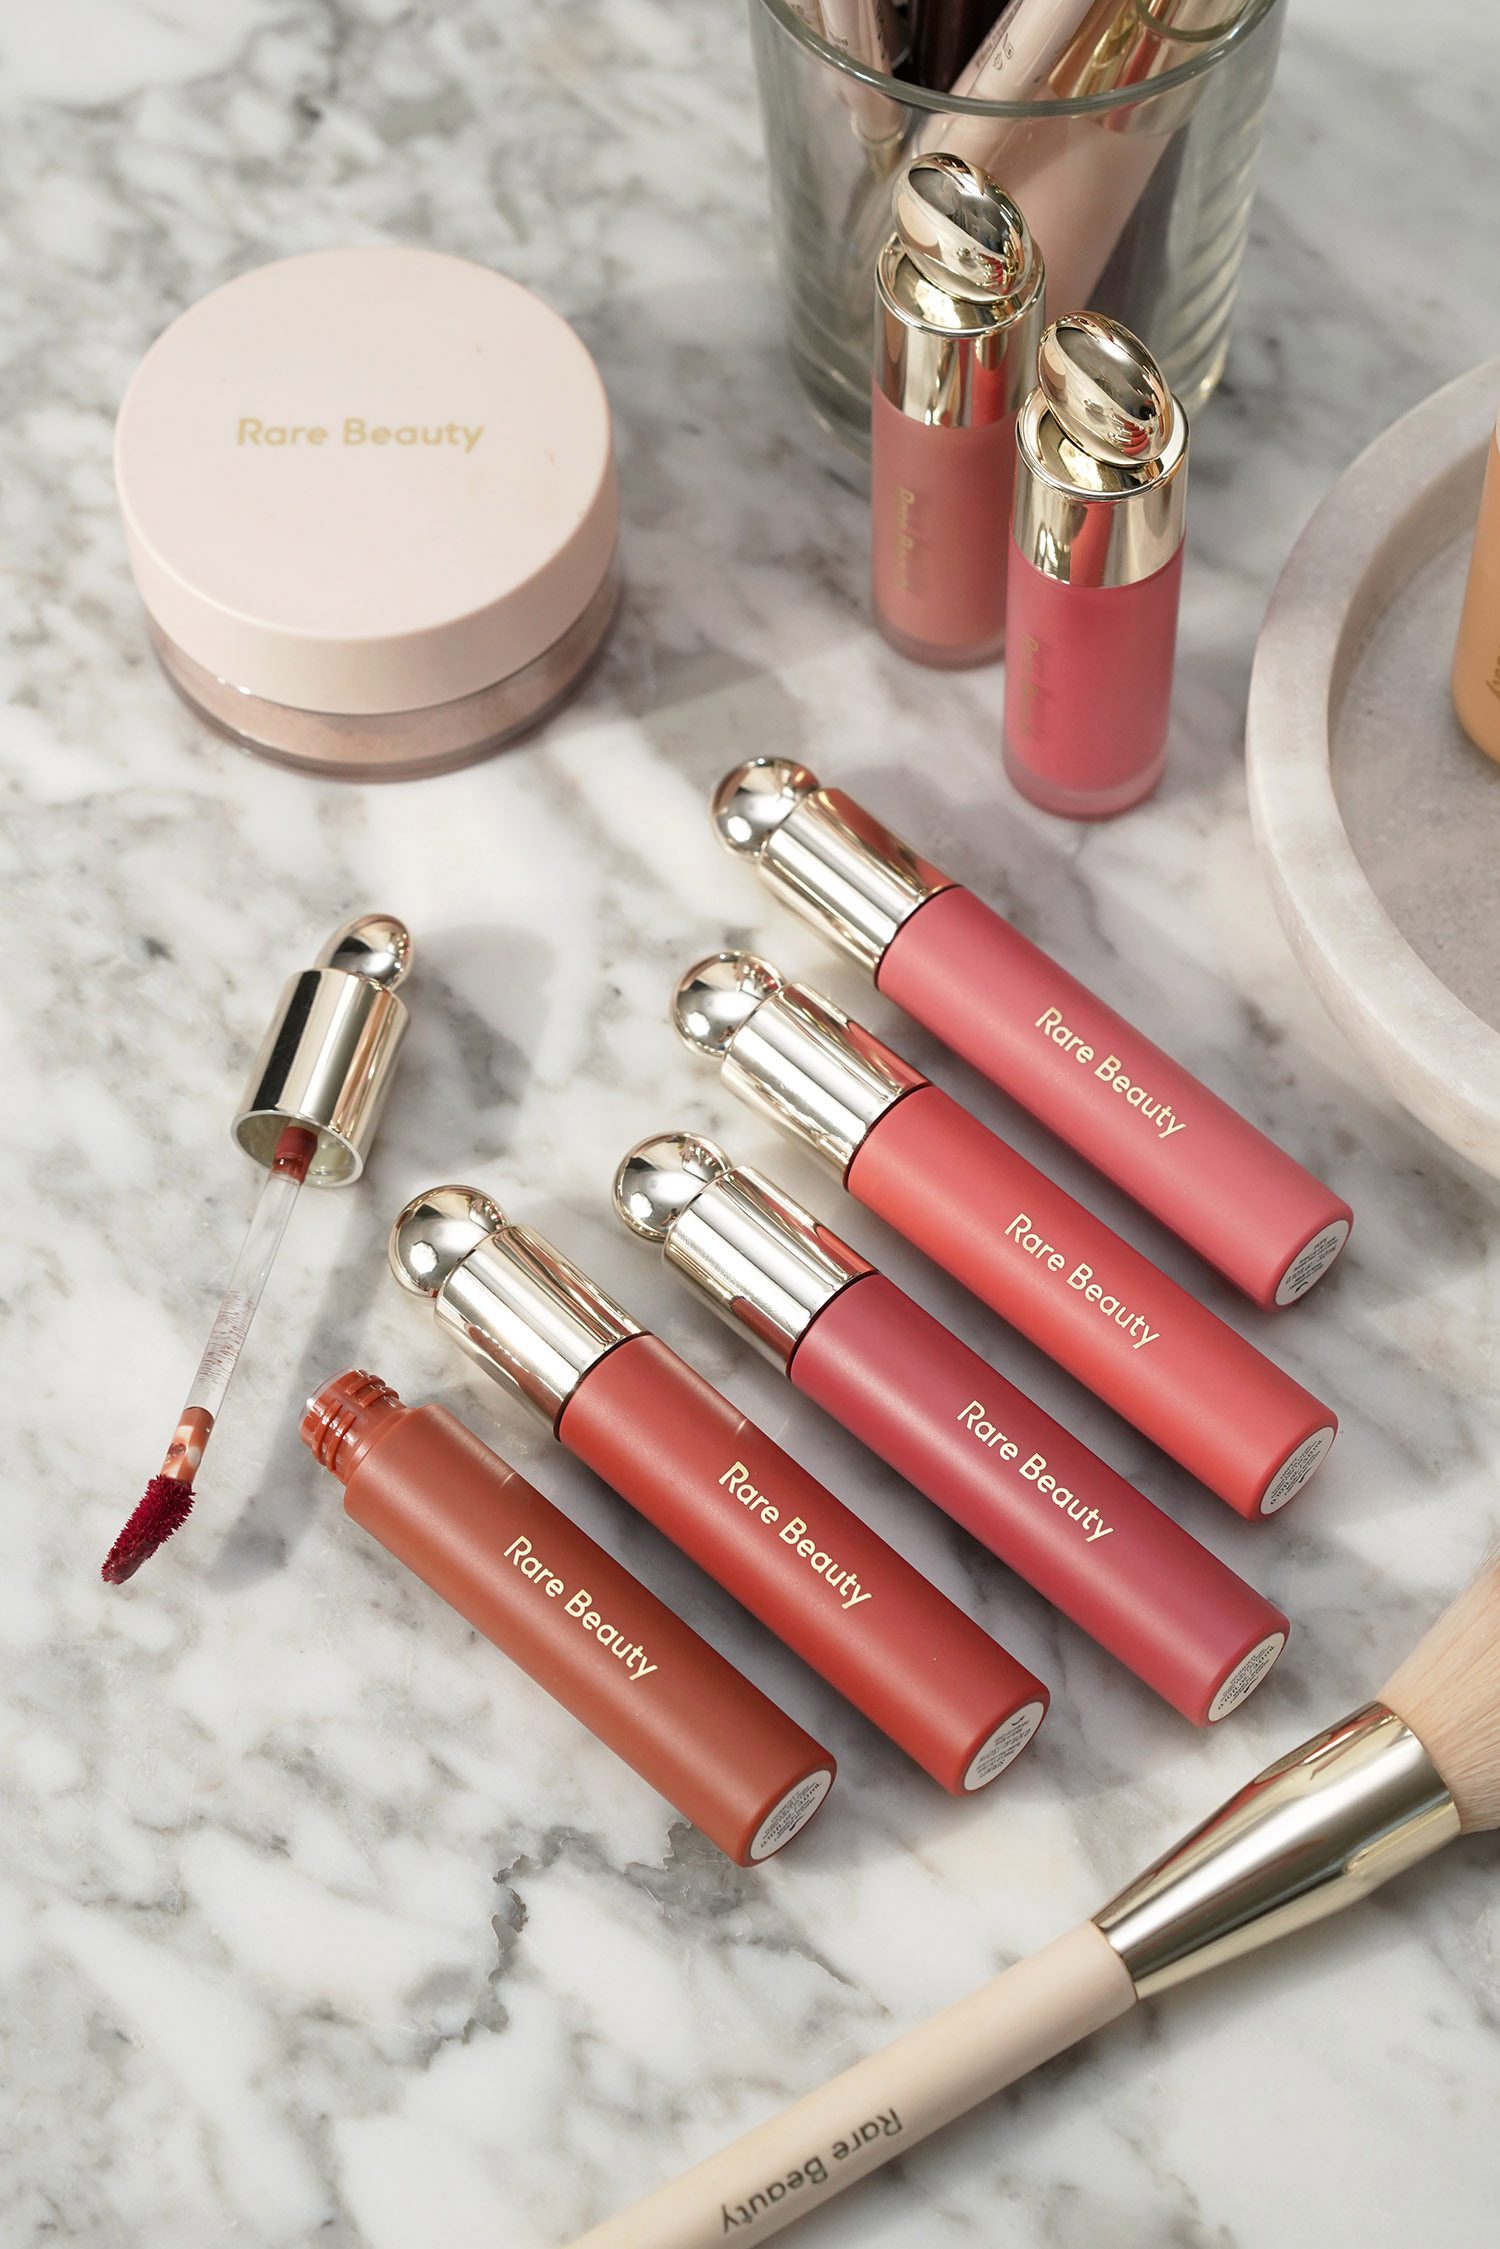 chanel beauty lipstick set